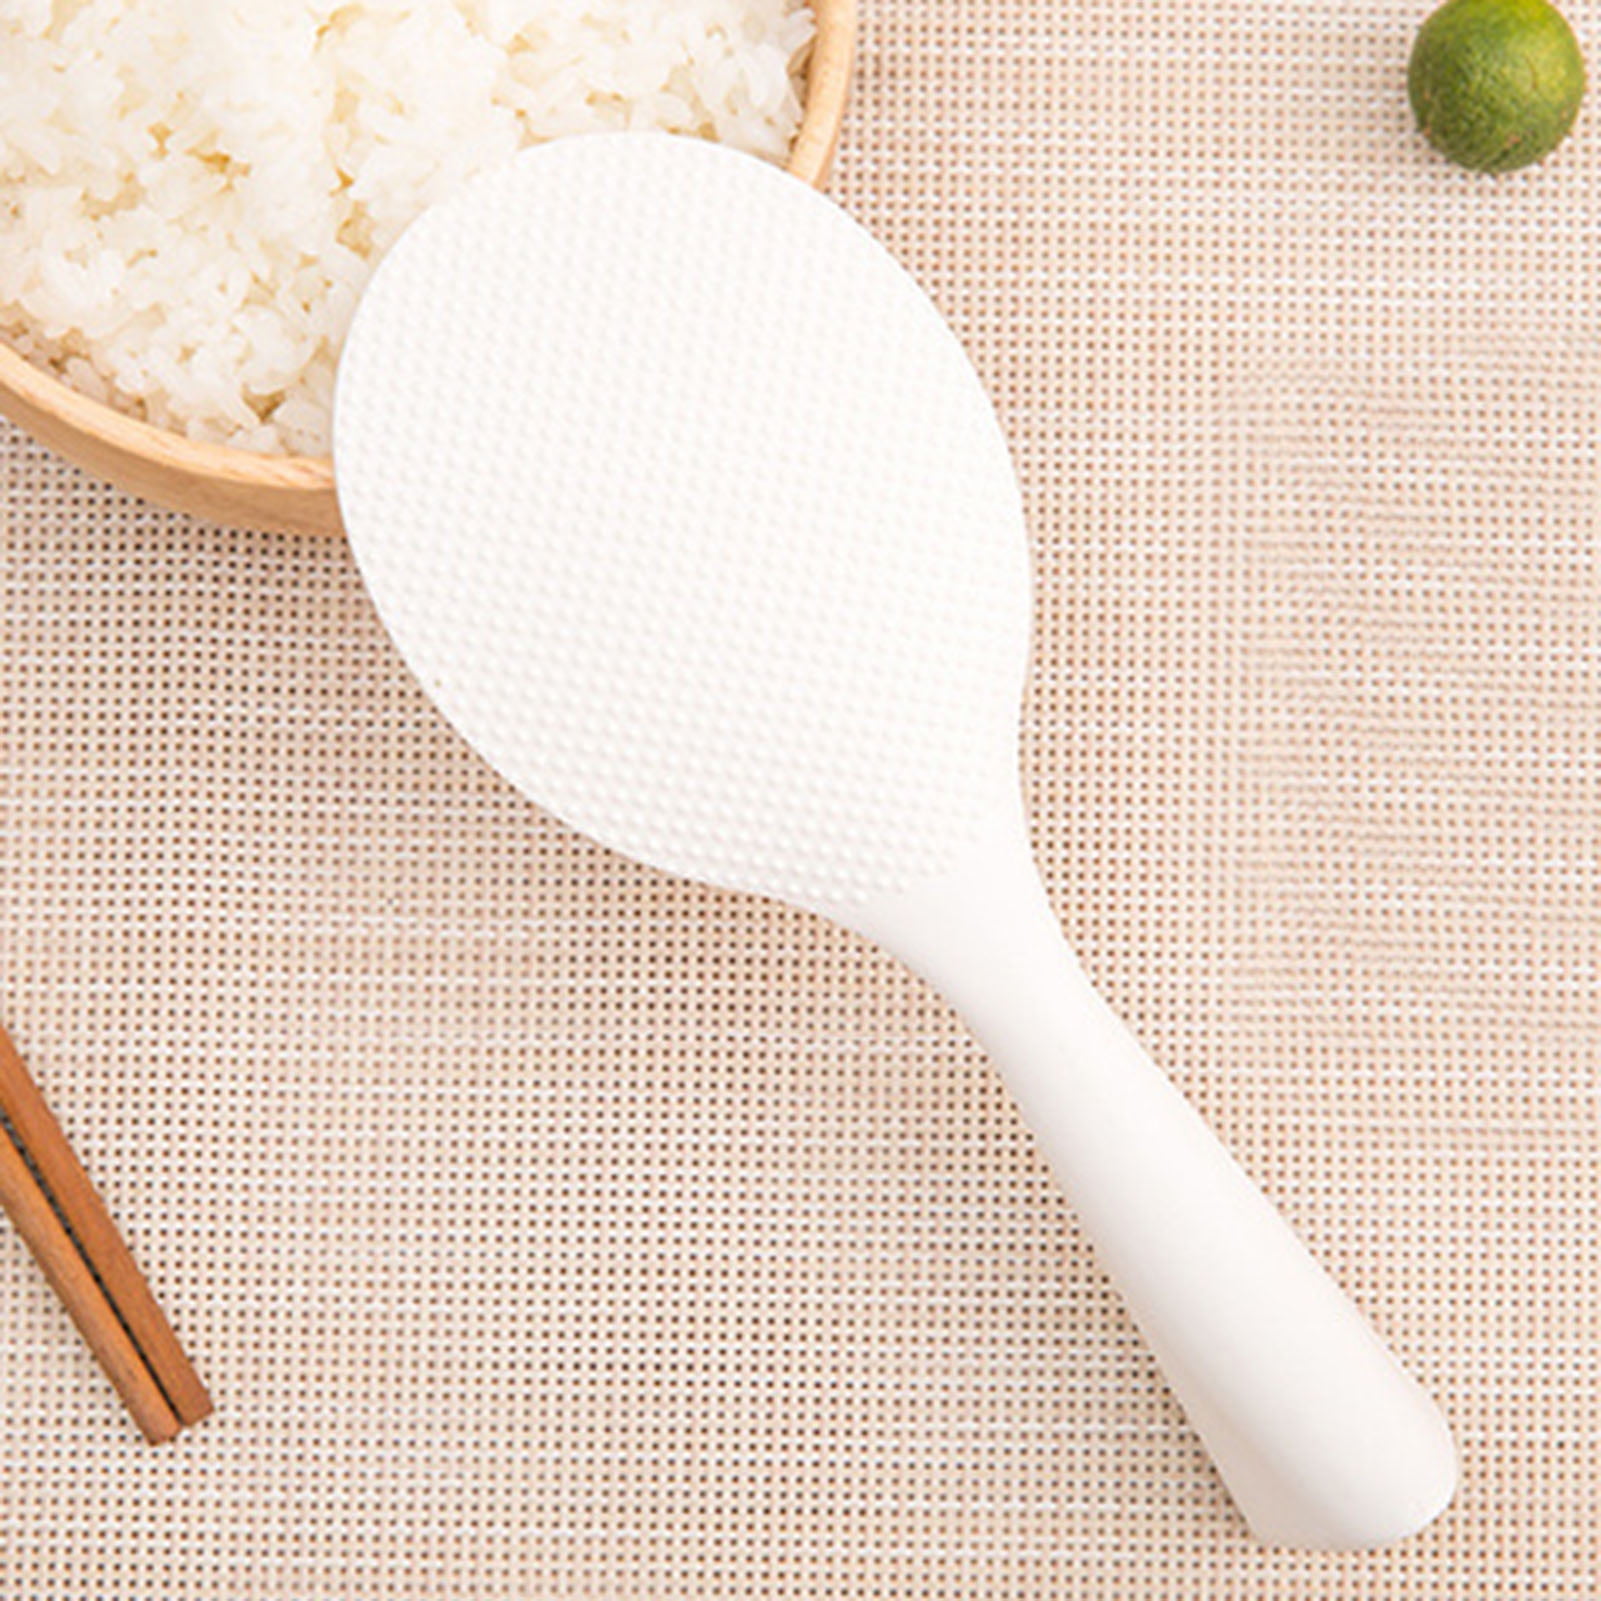 Rice Paddle – Wild Cherry Spoon Co.